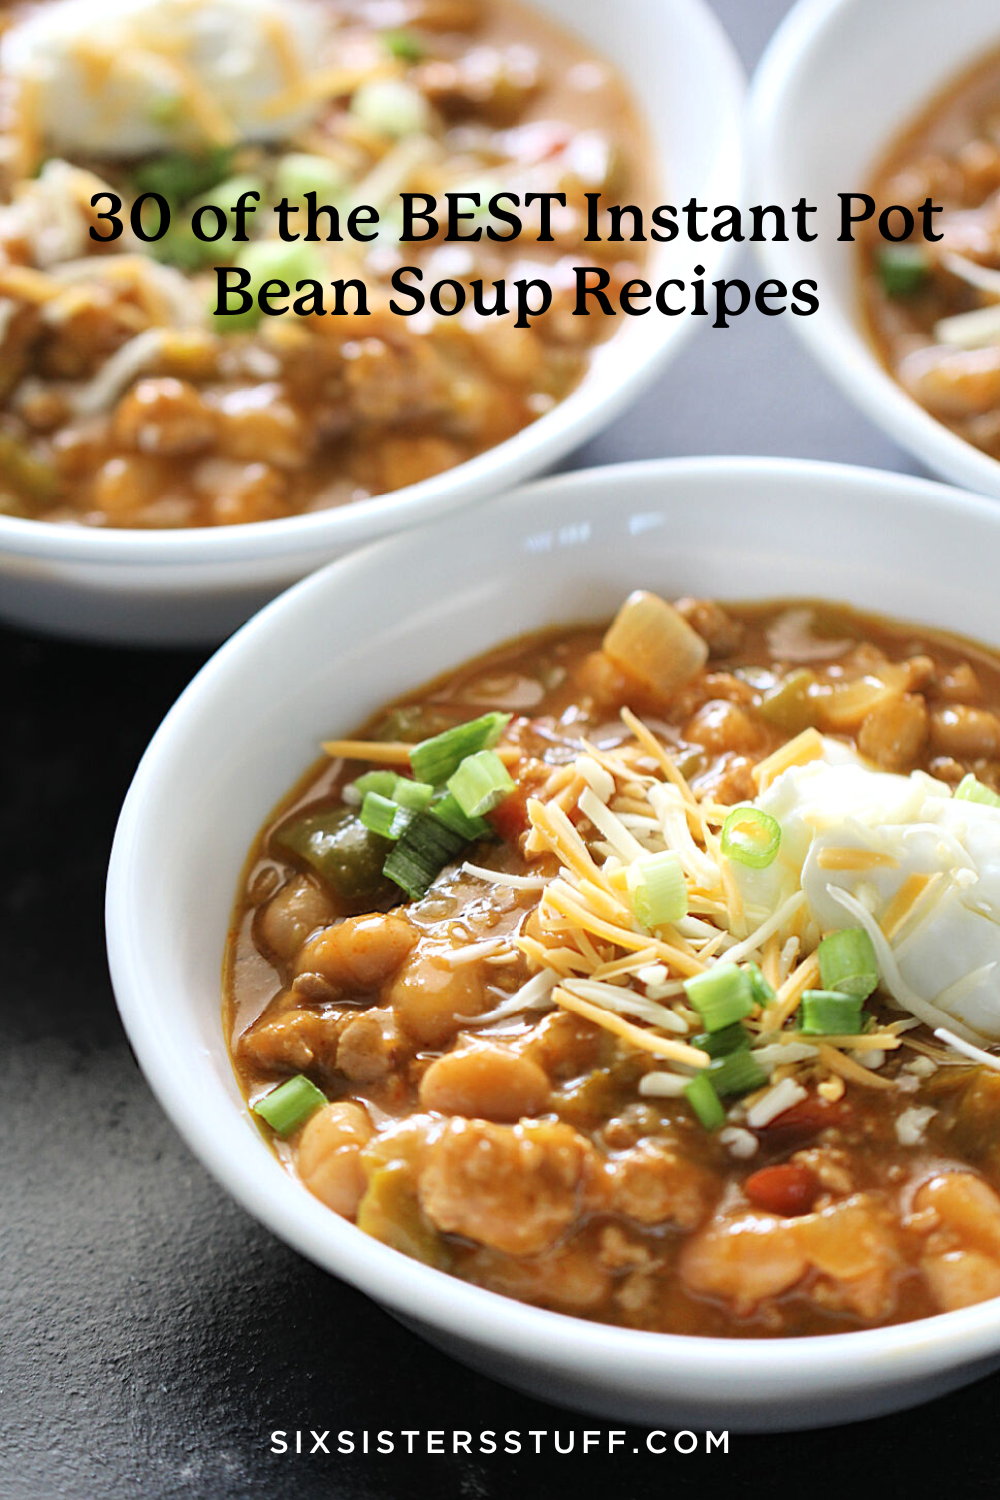 30 of the BEST Instant Pot Bean Soup Recipes